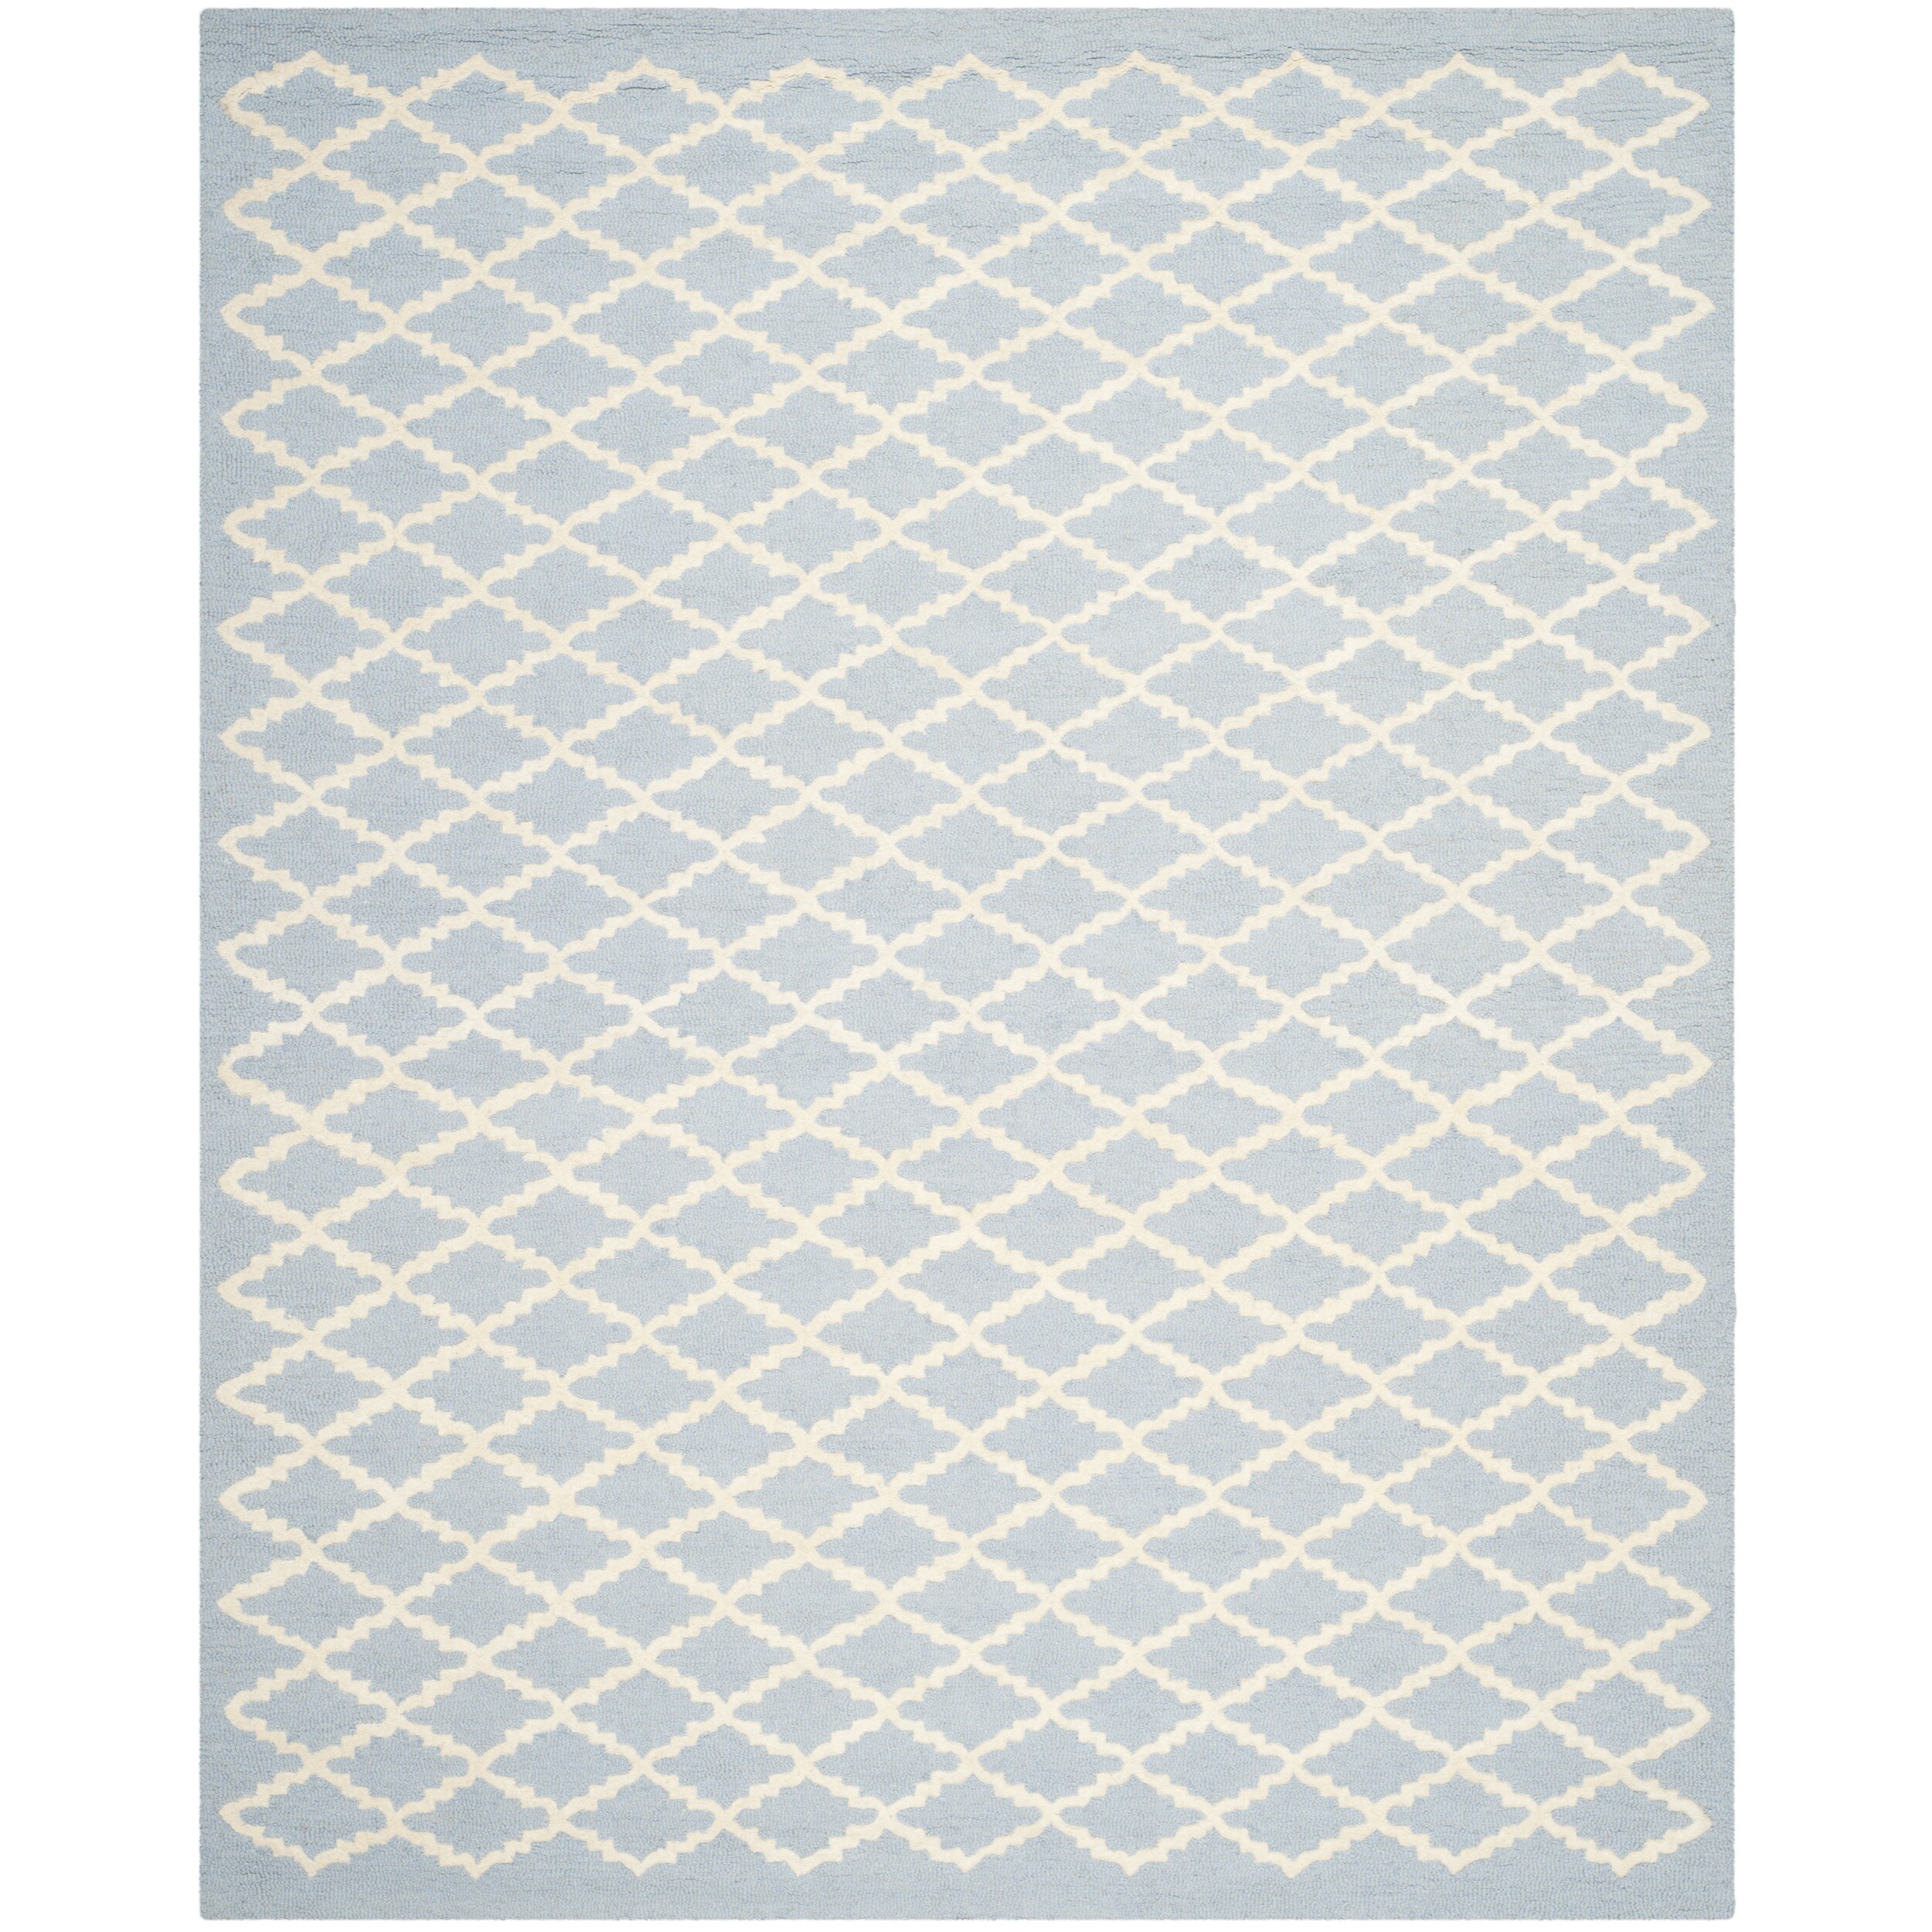 Safavieh Handmade Cambridge Moroccan Light Blue Crisscross Pattern Wool Rug (6 X 9)